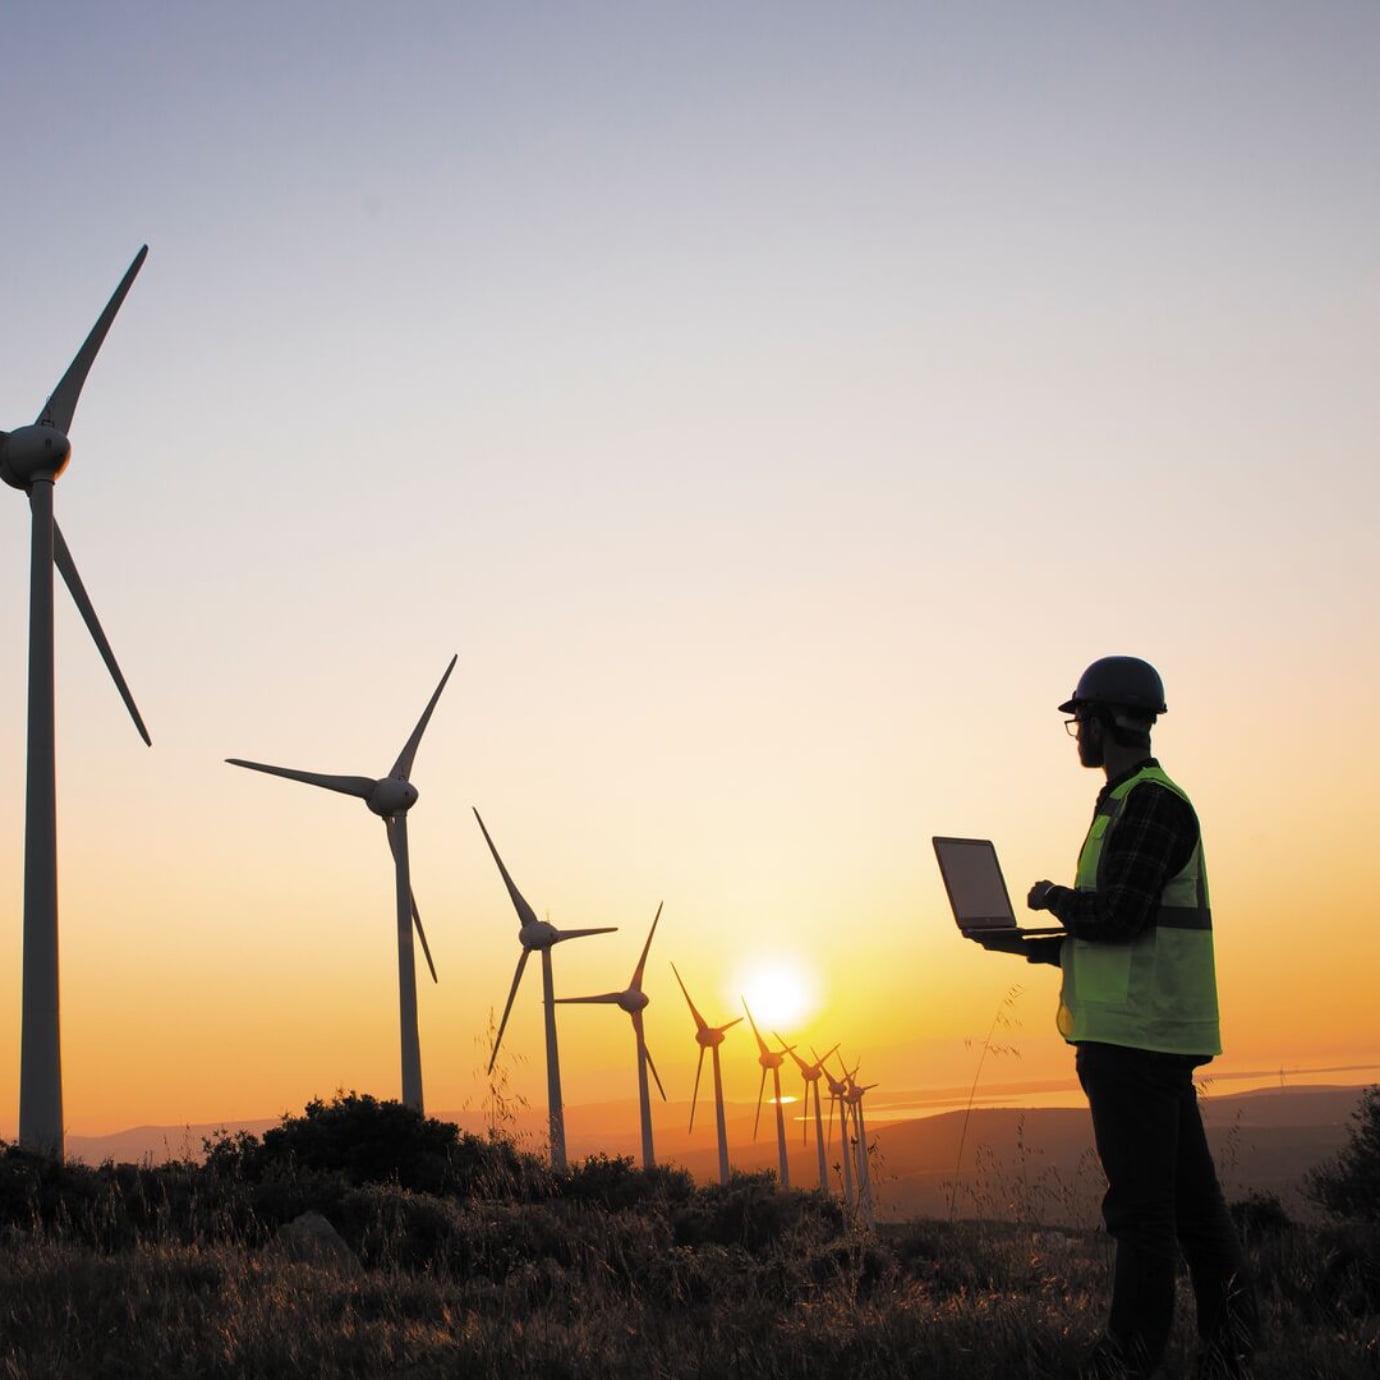 vodafone engineer windmills sustainability